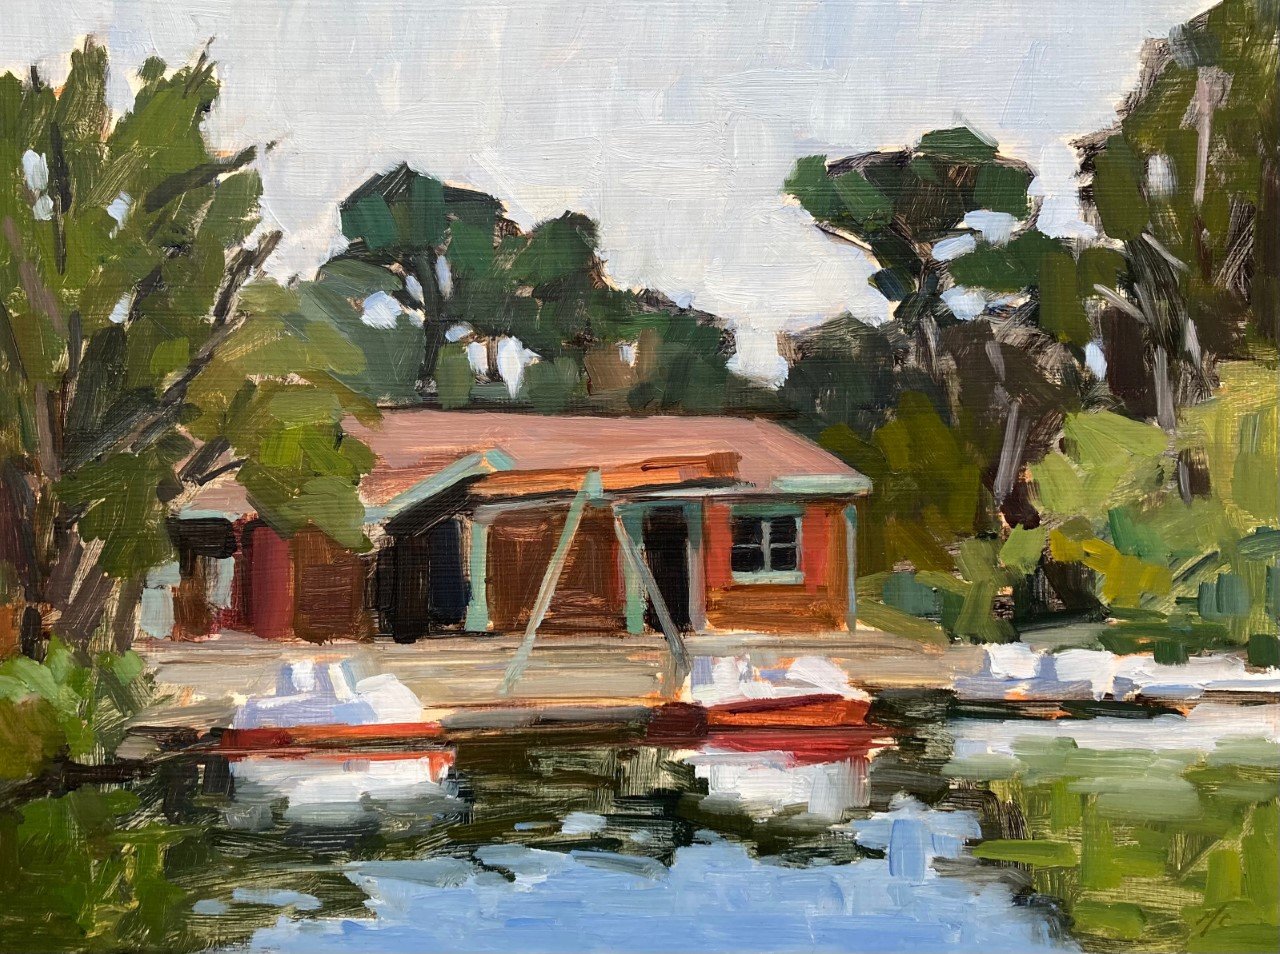 Stow Lake Boat House by Michael Chamberlain